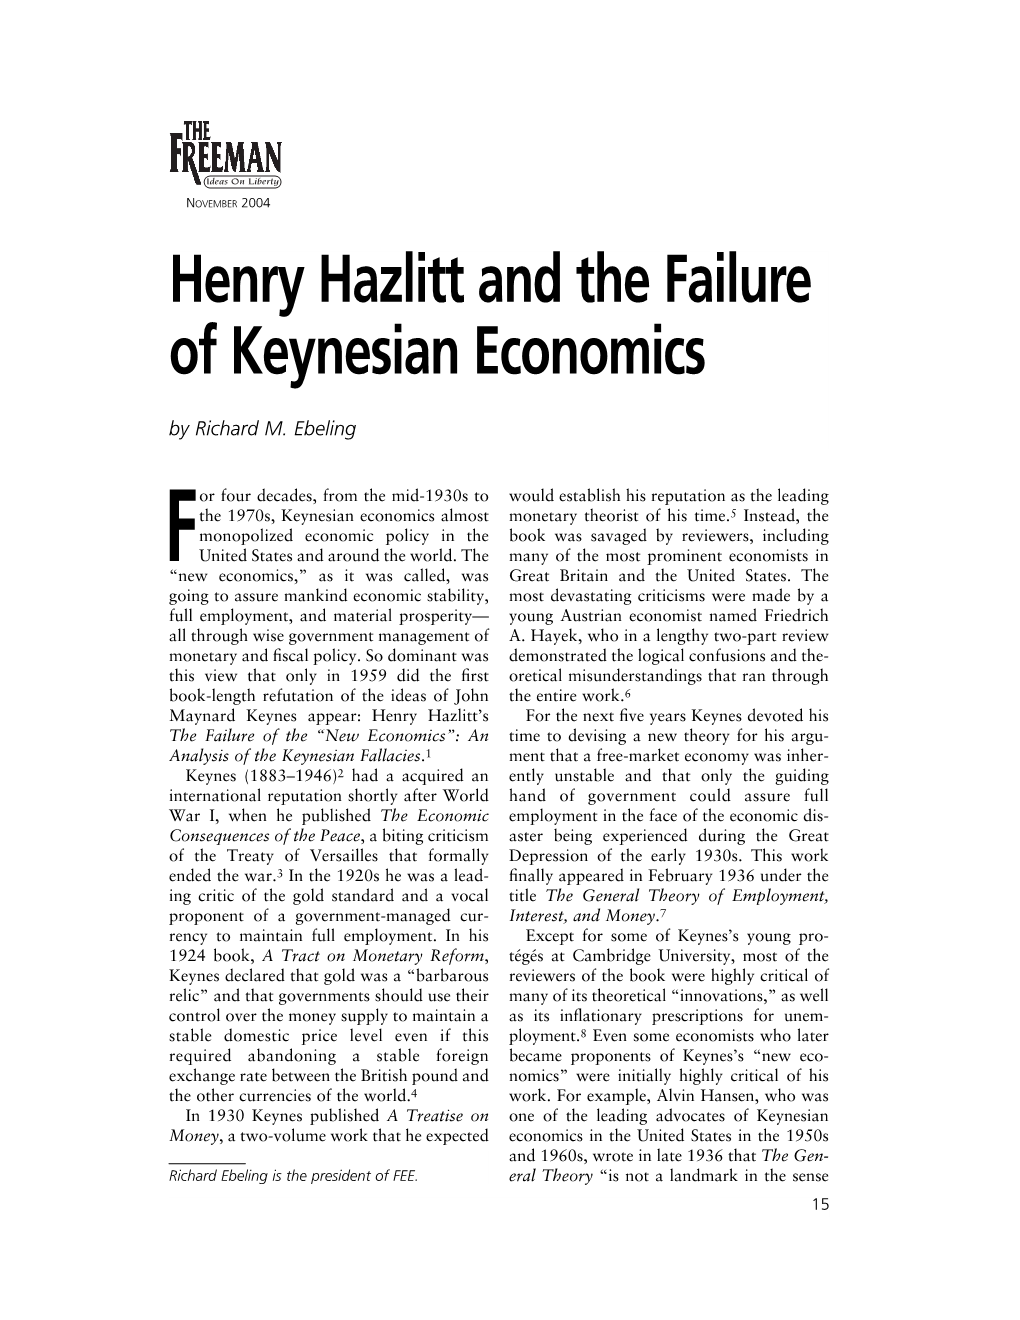 Henry Hazlitt and the Failure of Keynesian Economics